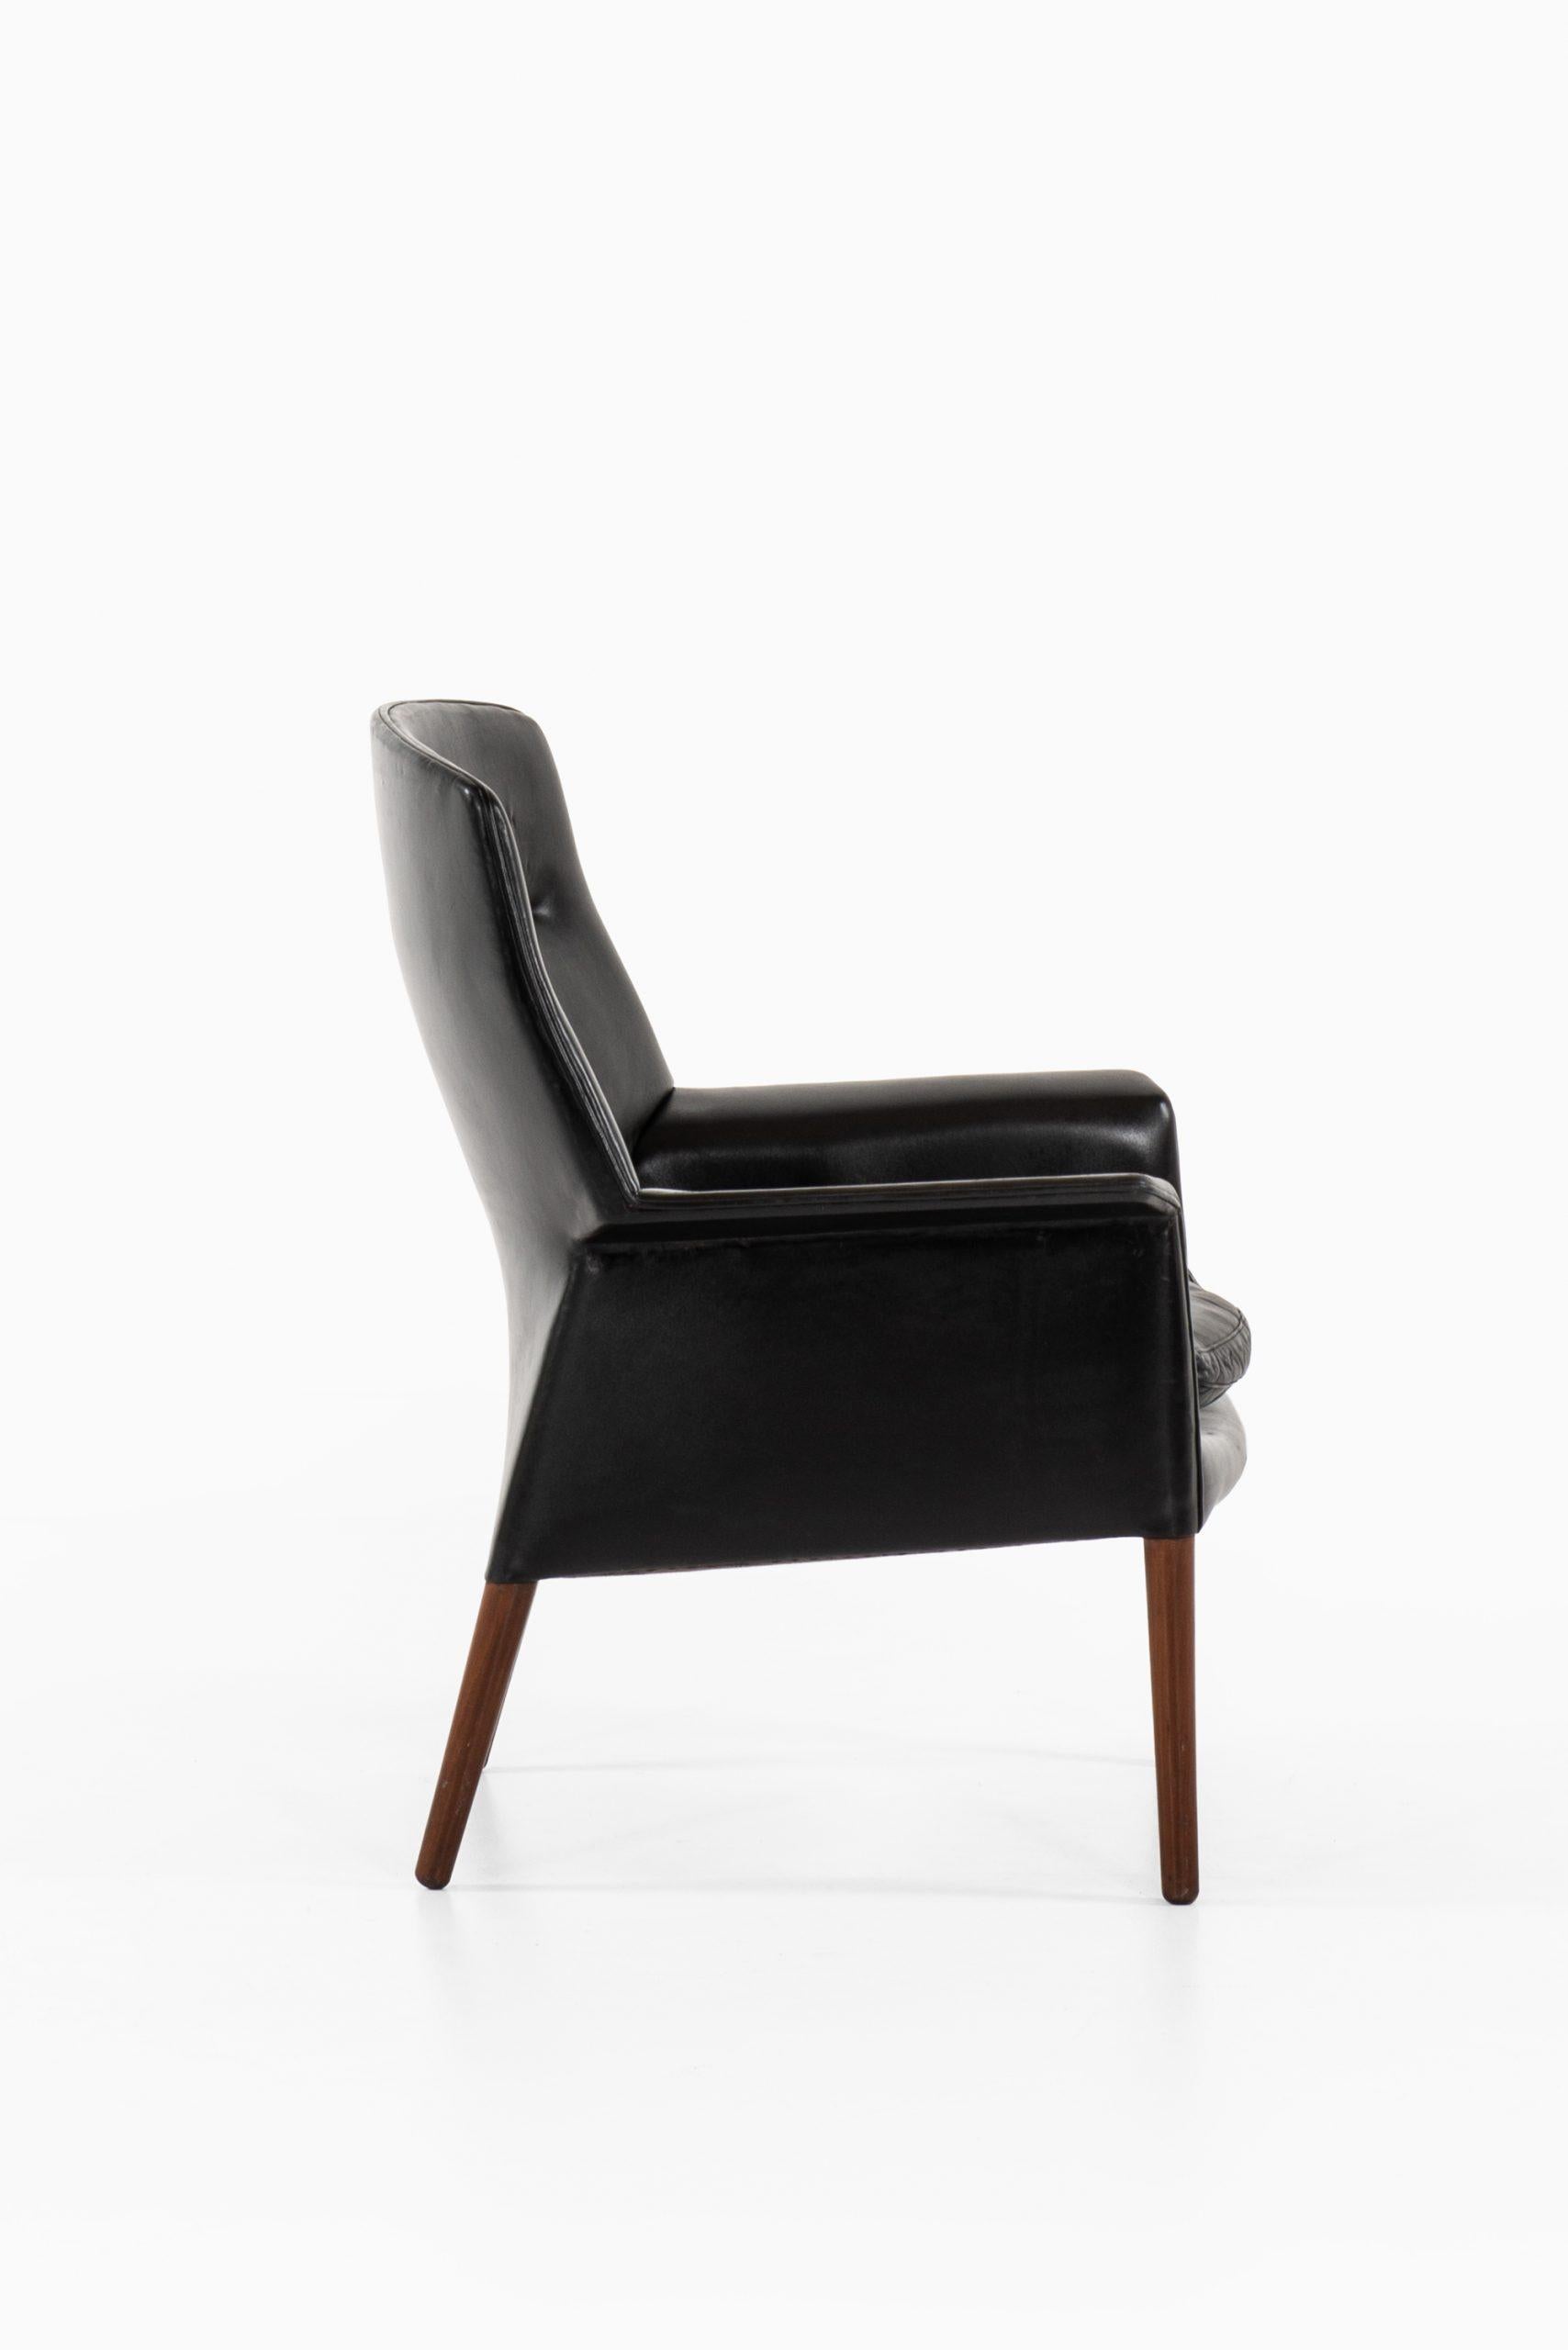 Danish Aksel Bender Madsen & Ejner Larsen Easy Chair by Cabinetmaker Willy Beck For Sale